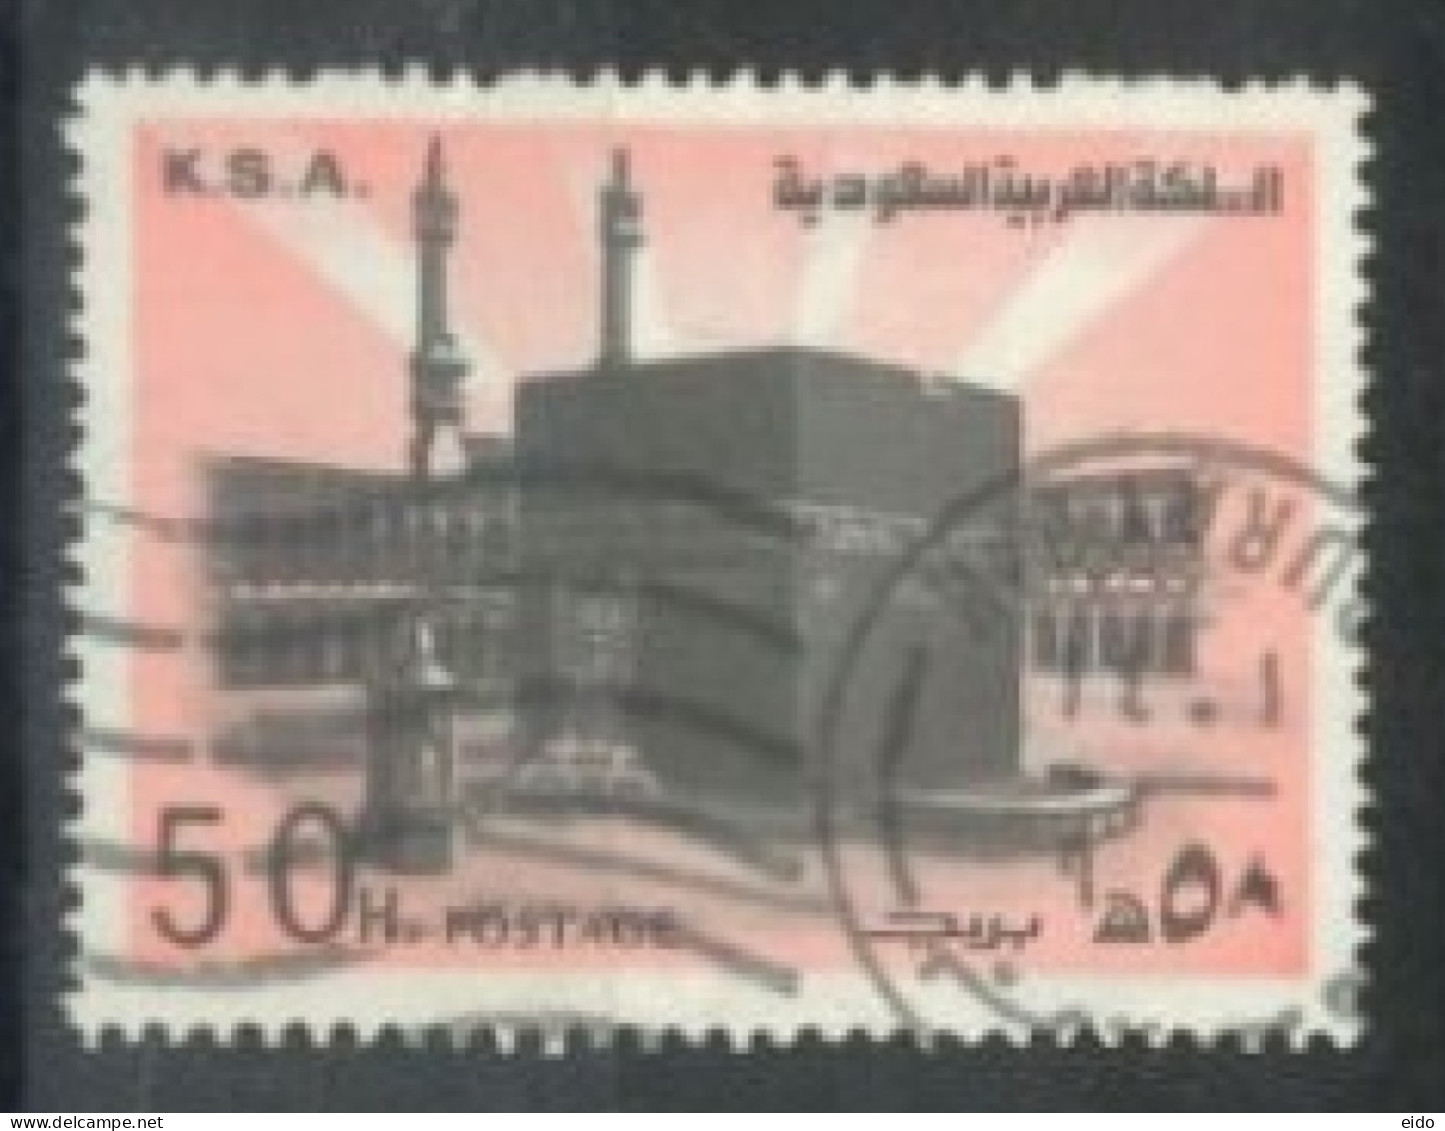 SAUDI ARABIA -1976/81, HOLY KAABA, MECCA STAMP, SG # 1146, USED. - Arabie Saoudite